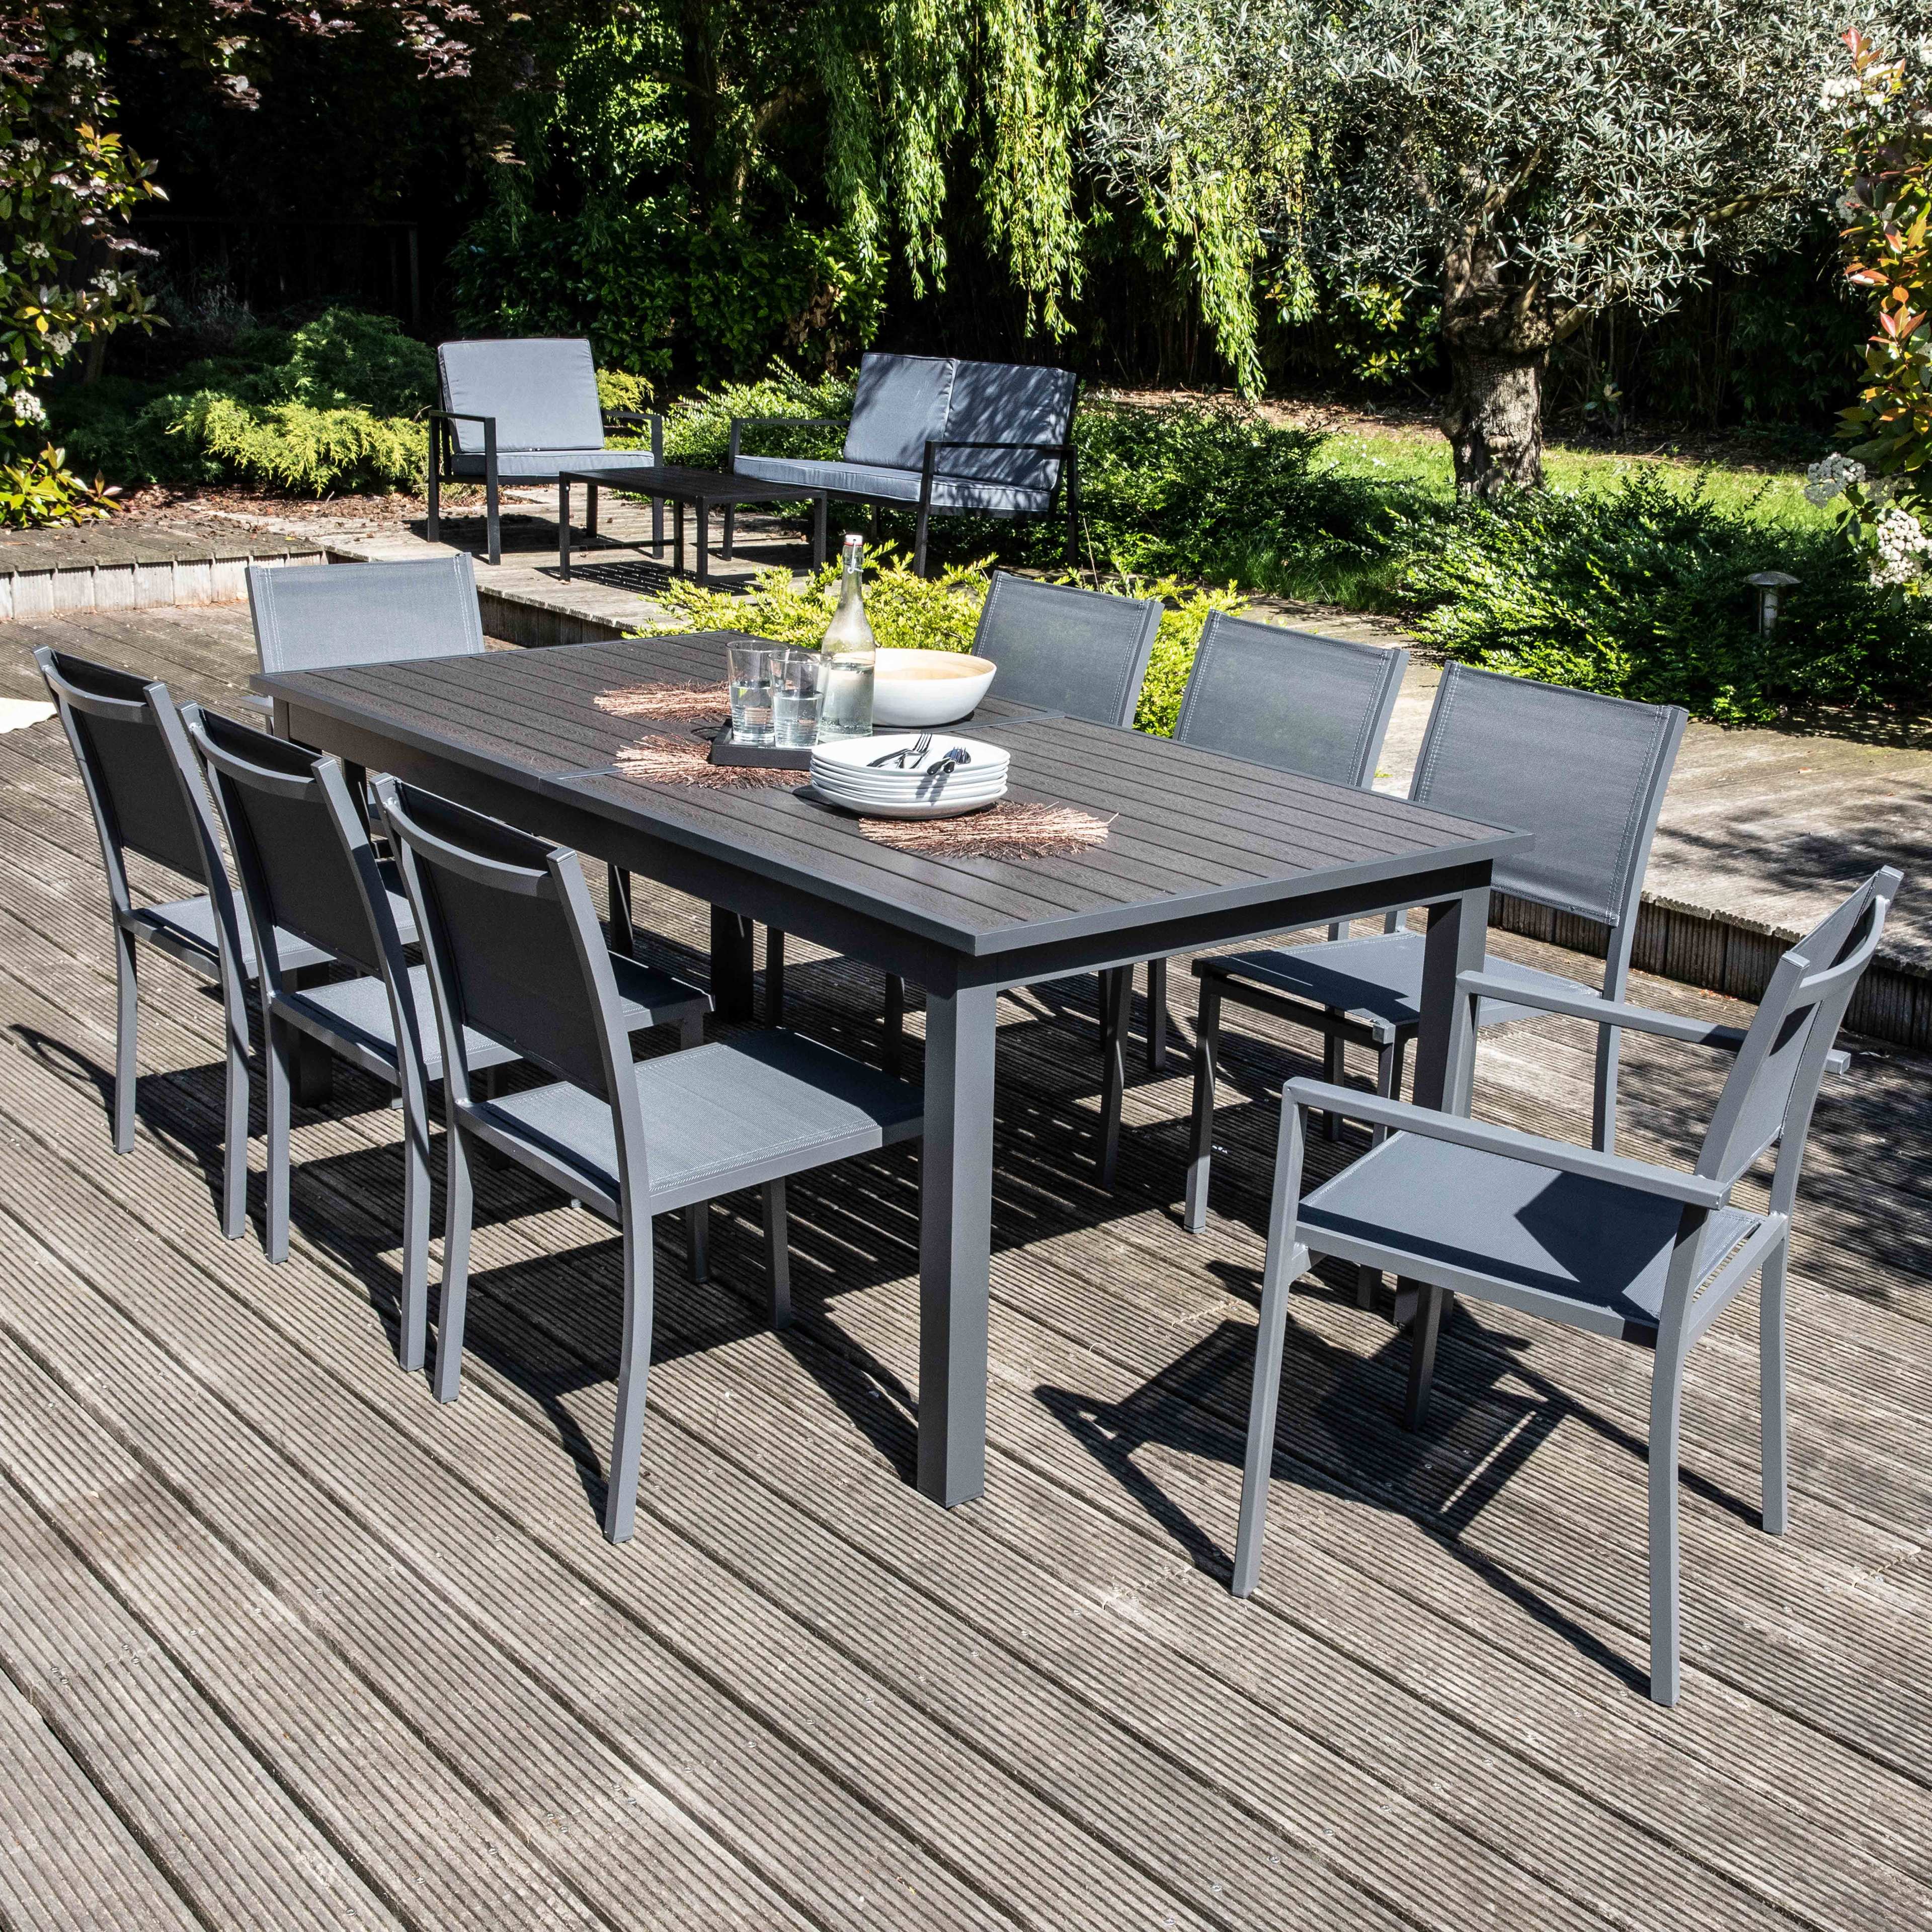 Table de jardin extensible rectangulaire en aluminium (90-180x90